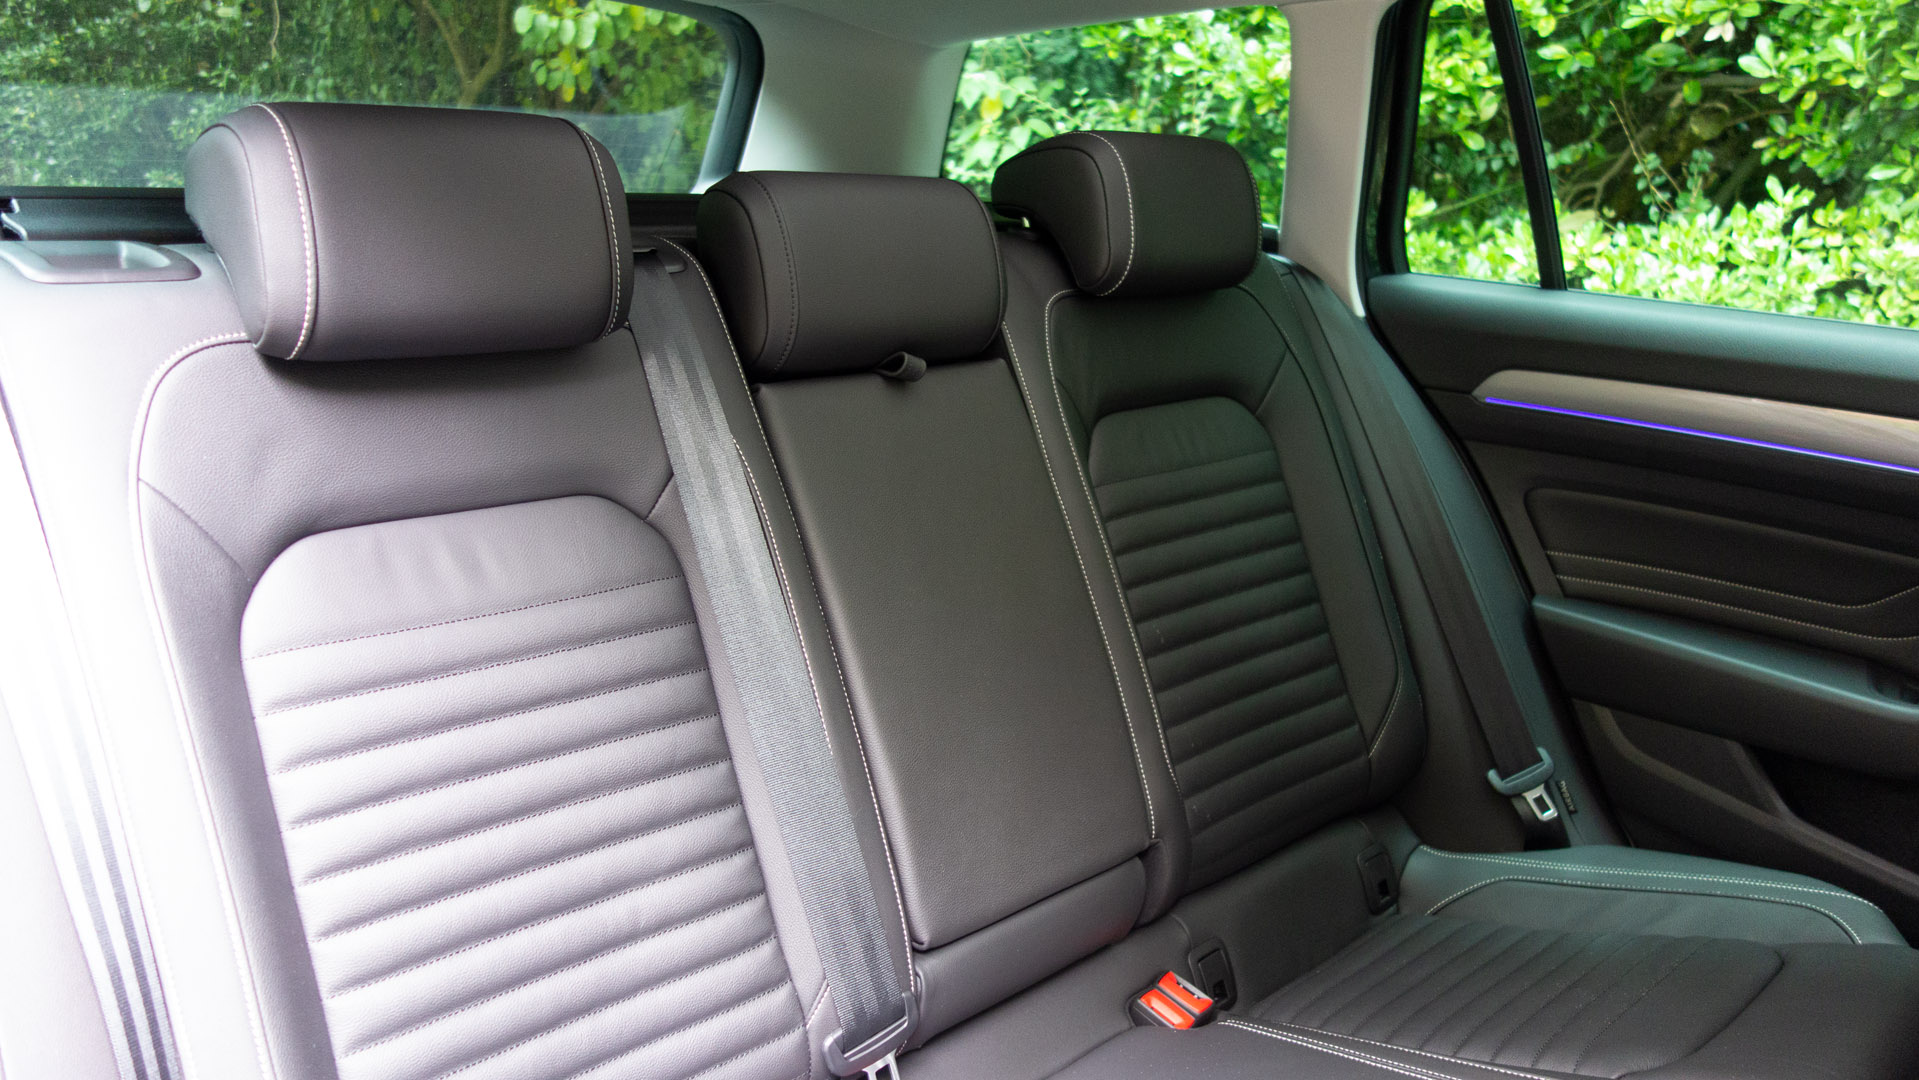 Volkswagen Passat Estate GTE rear seats